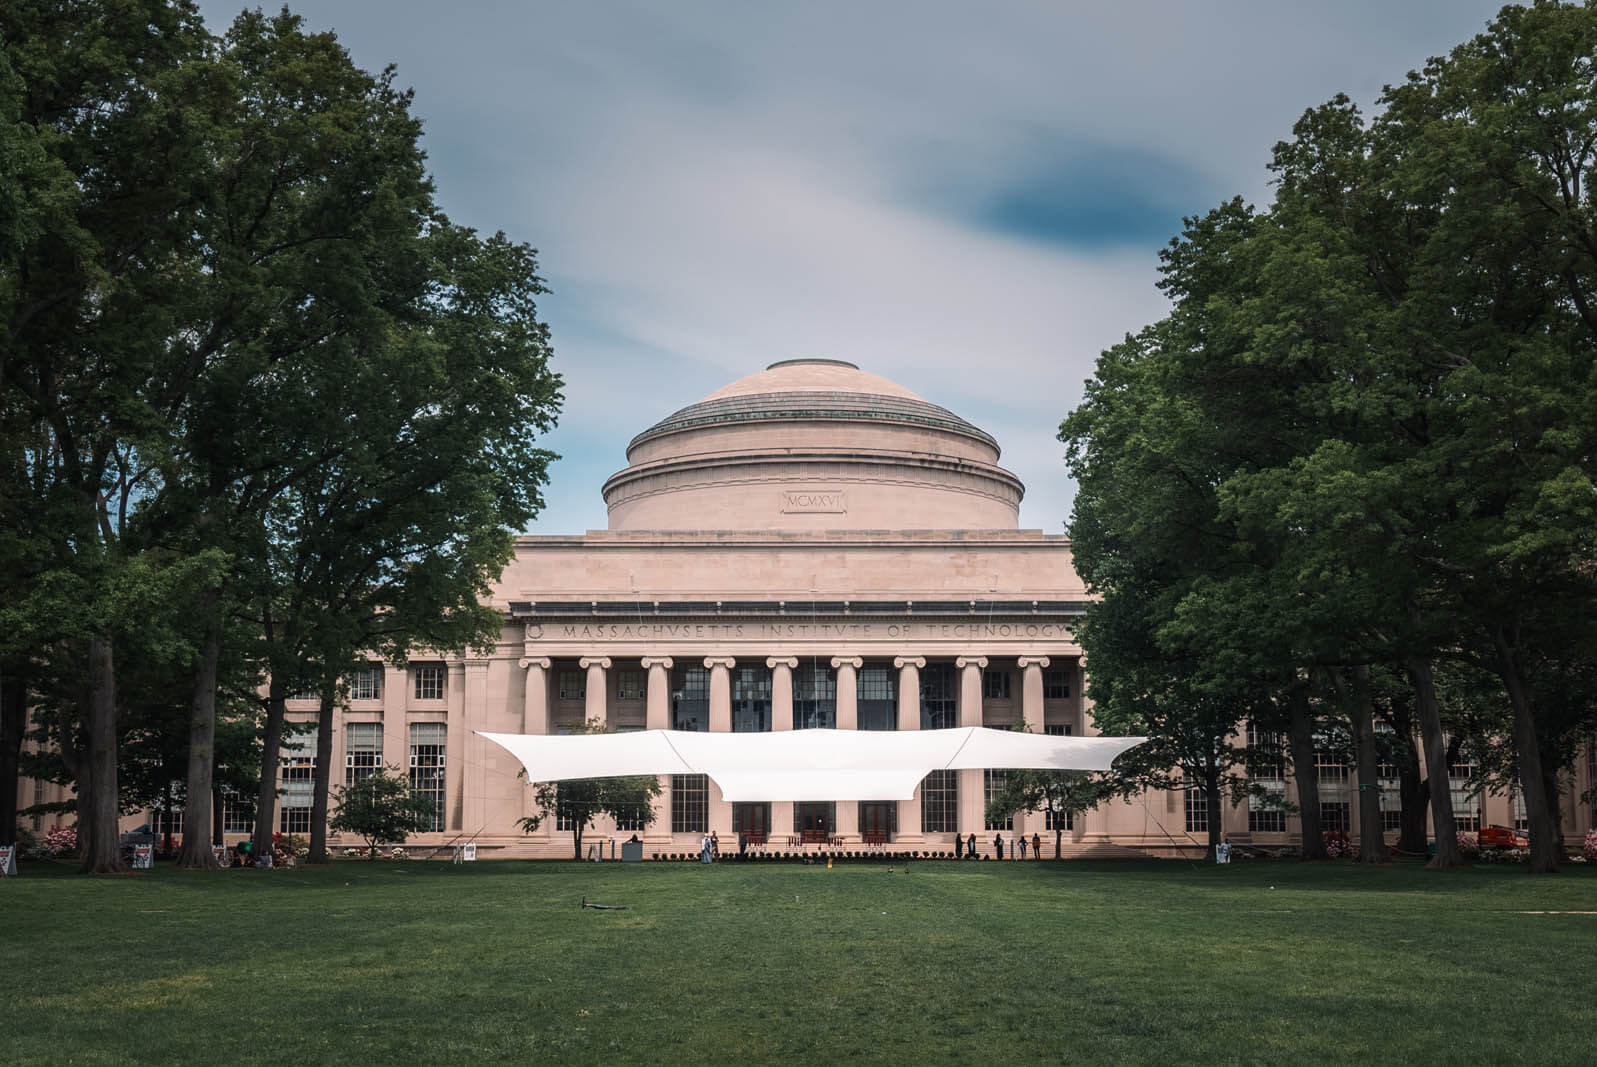 Massachusetts Institute of Technology or MIT in Cambridge in Boston